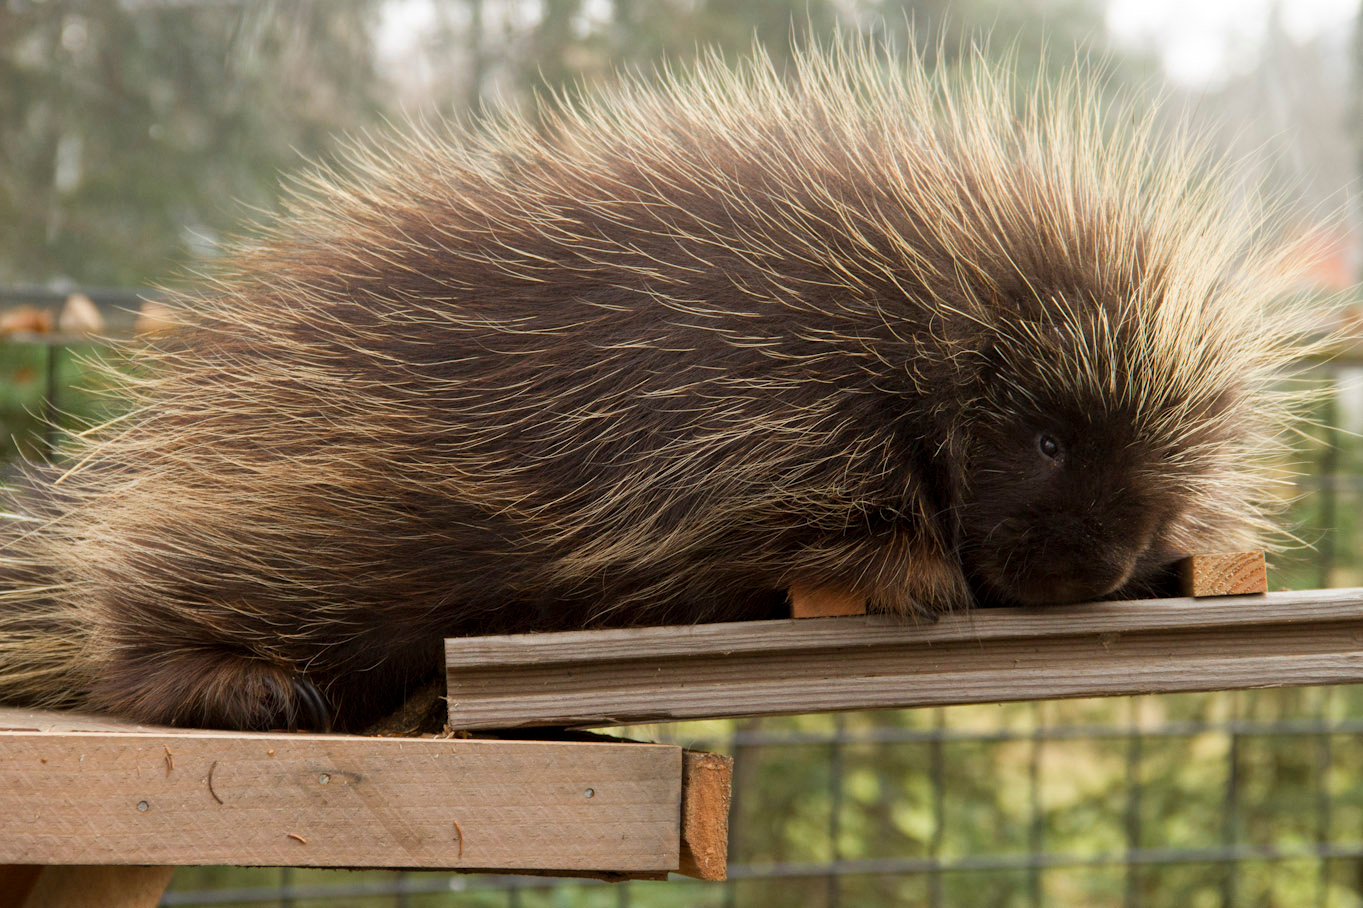 Porcupine, squirrel — The Alaska Zoo